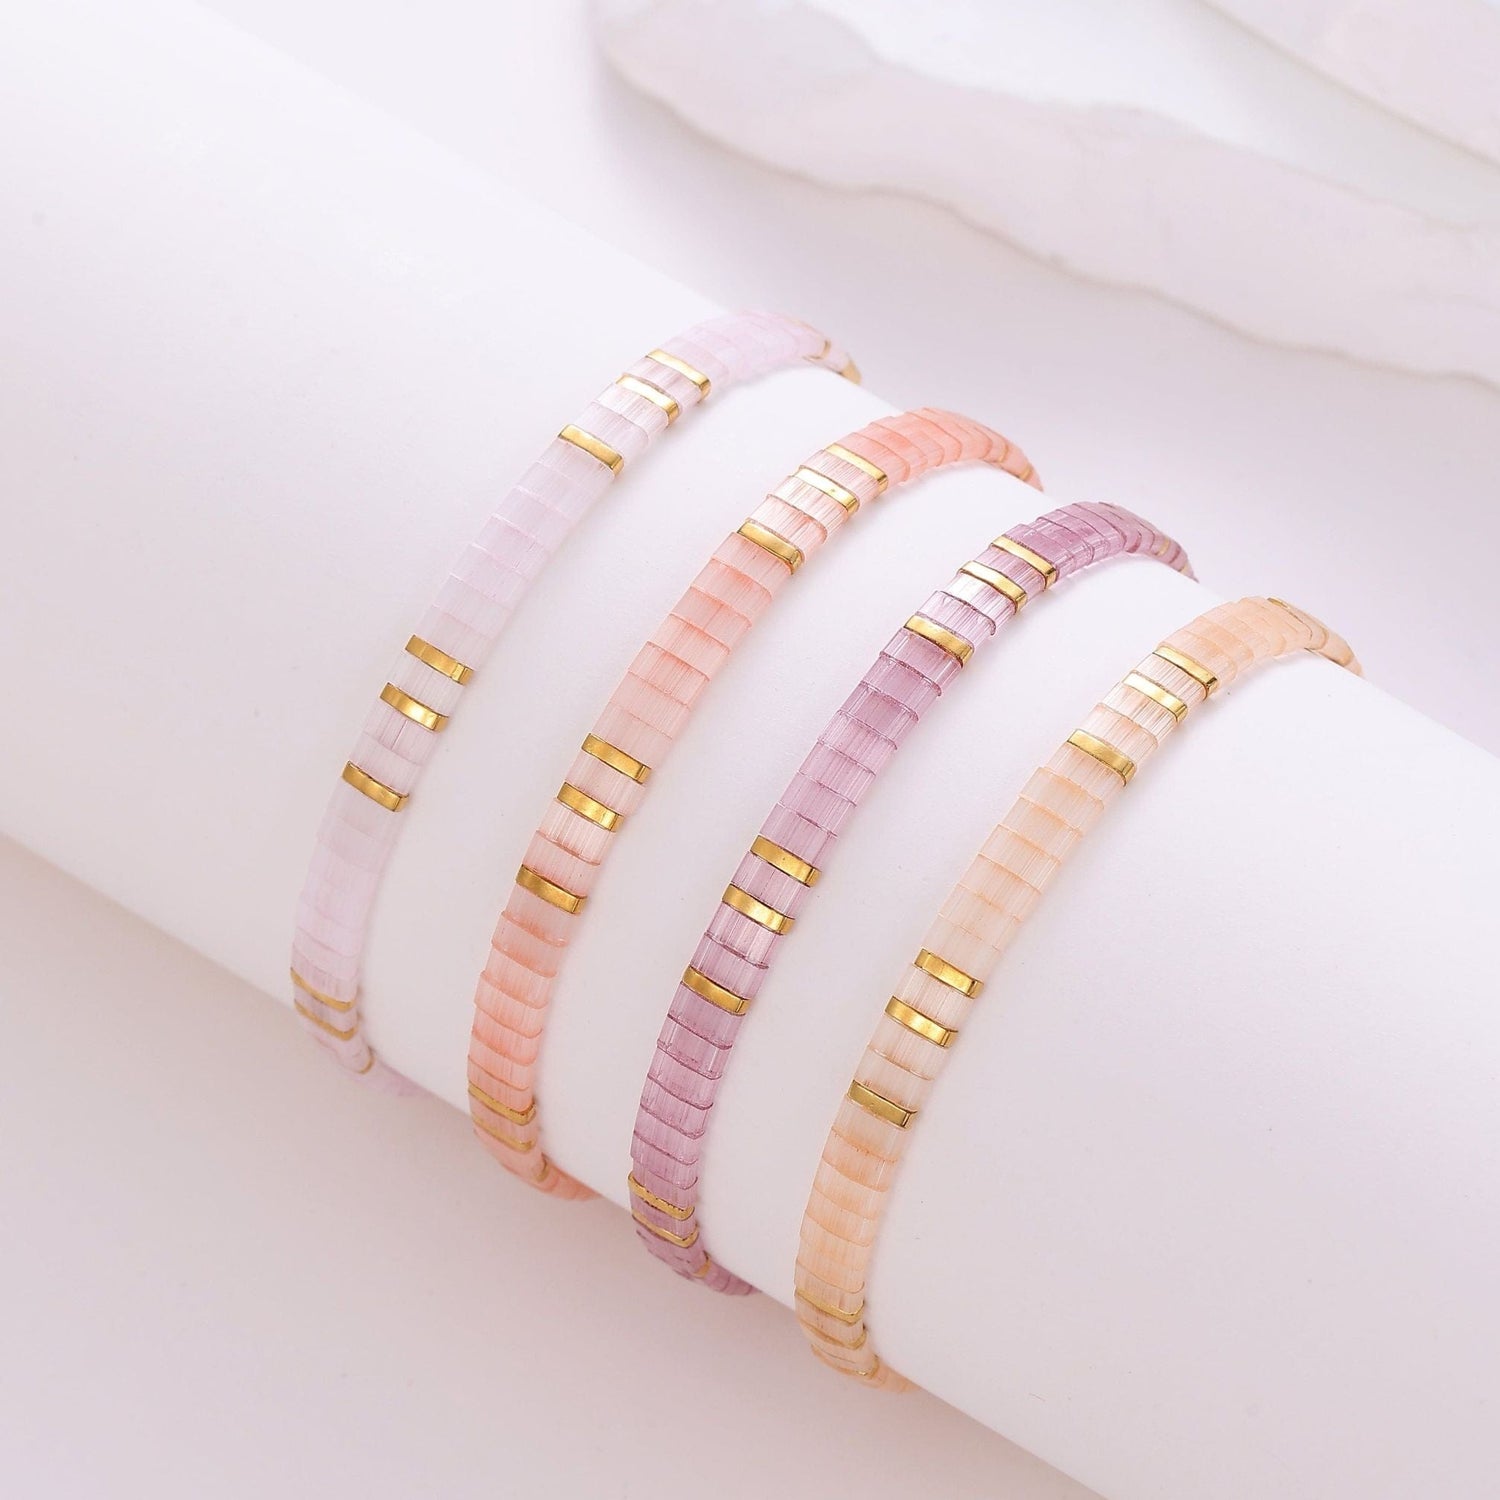 Sophie Set - Beaded bracelets